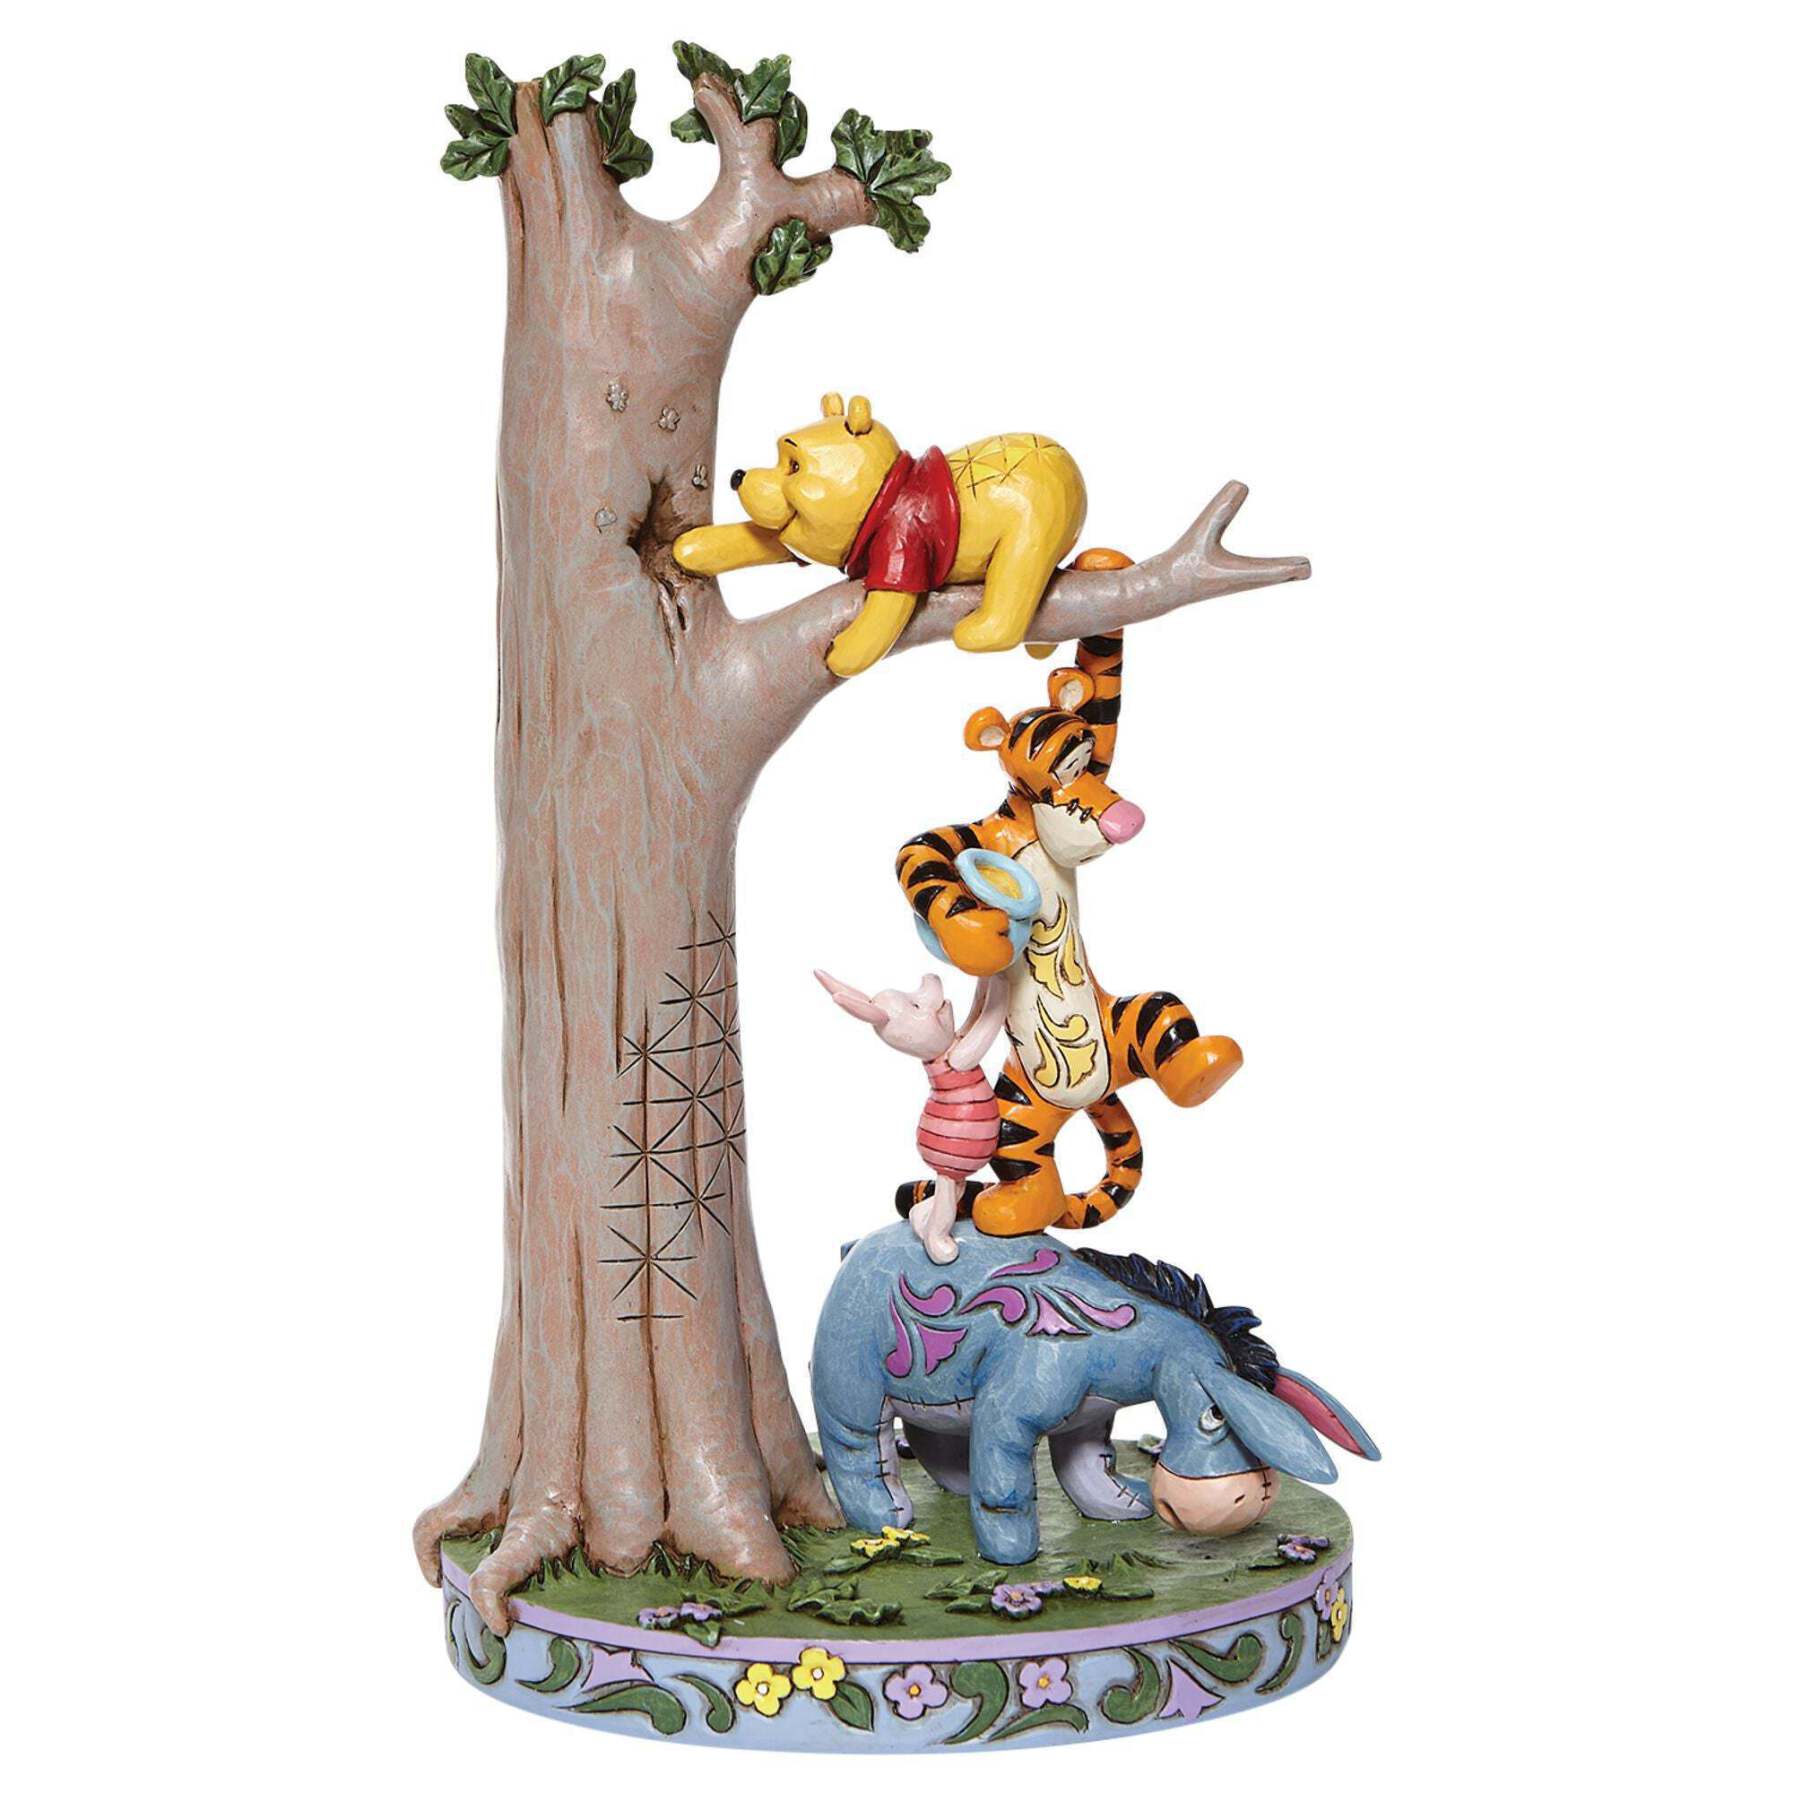  مجسمه دیزنی Tree with Pooh and friends 